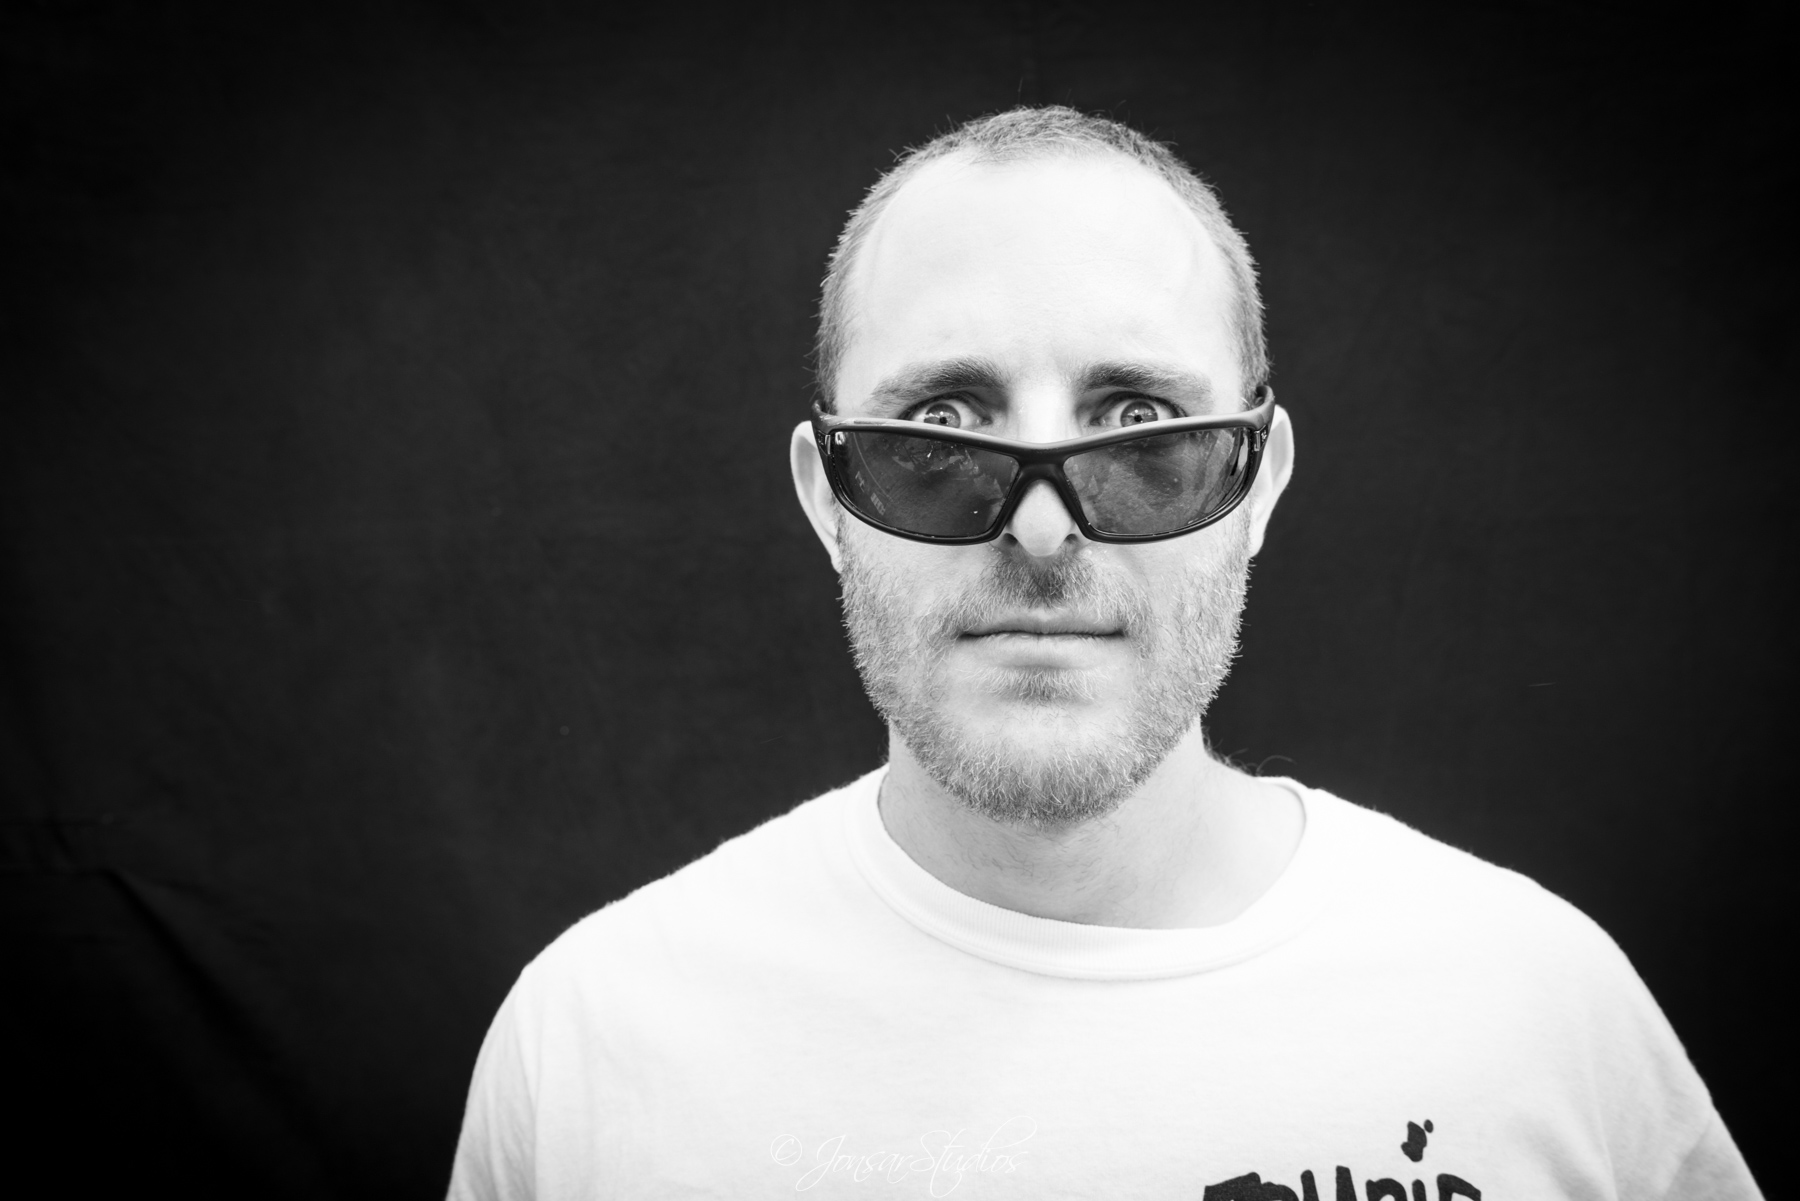 Portrait of man peering over sunglasses, photographed on black background